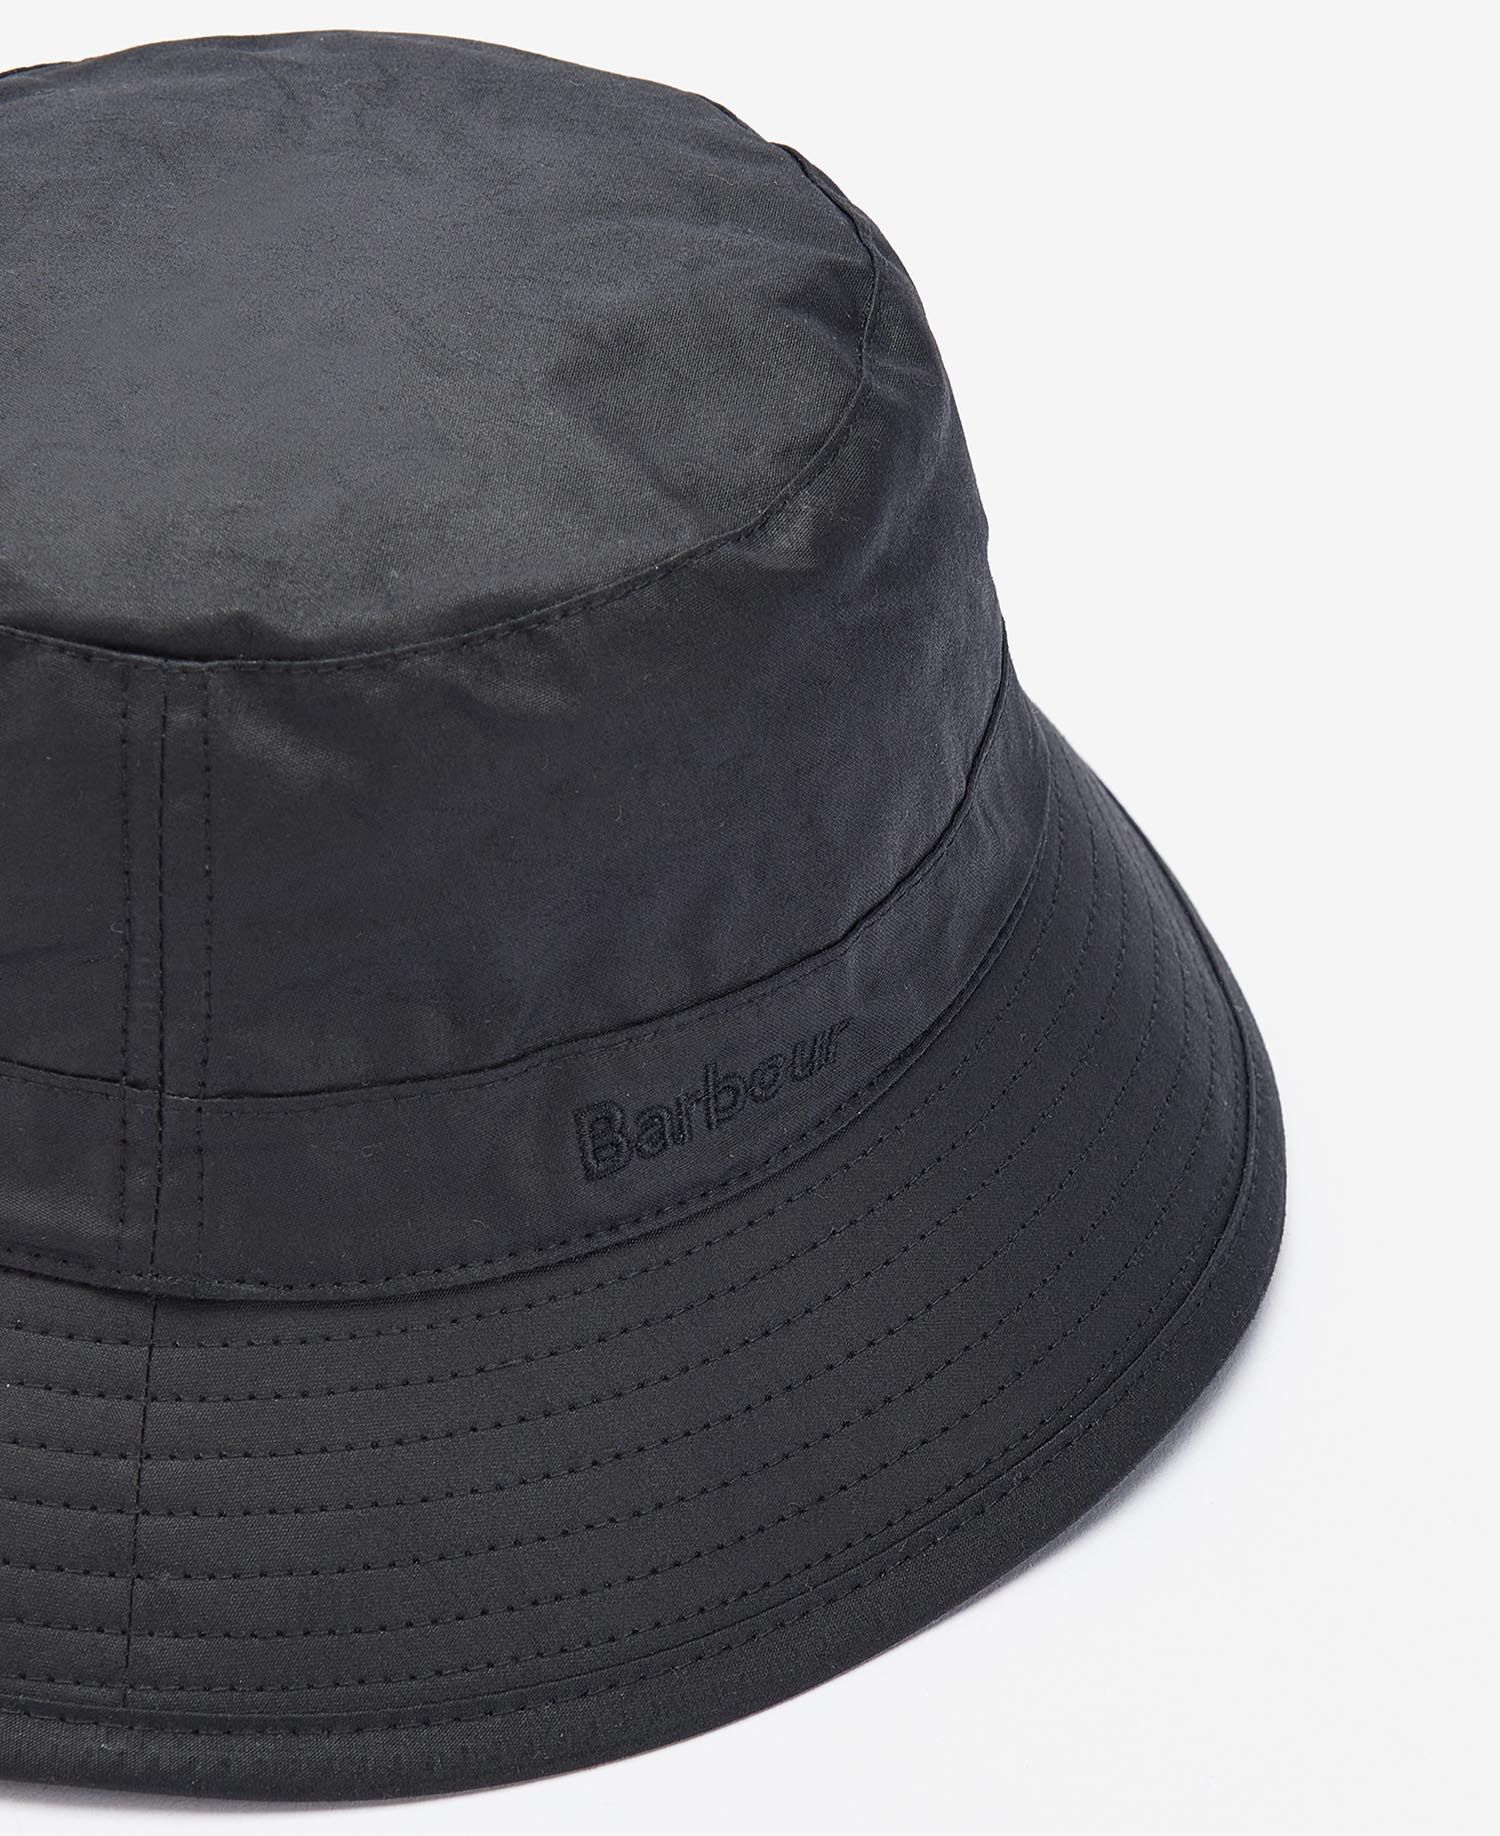 BARBOUR Men's Wax Sports Hat MHA0001 Black